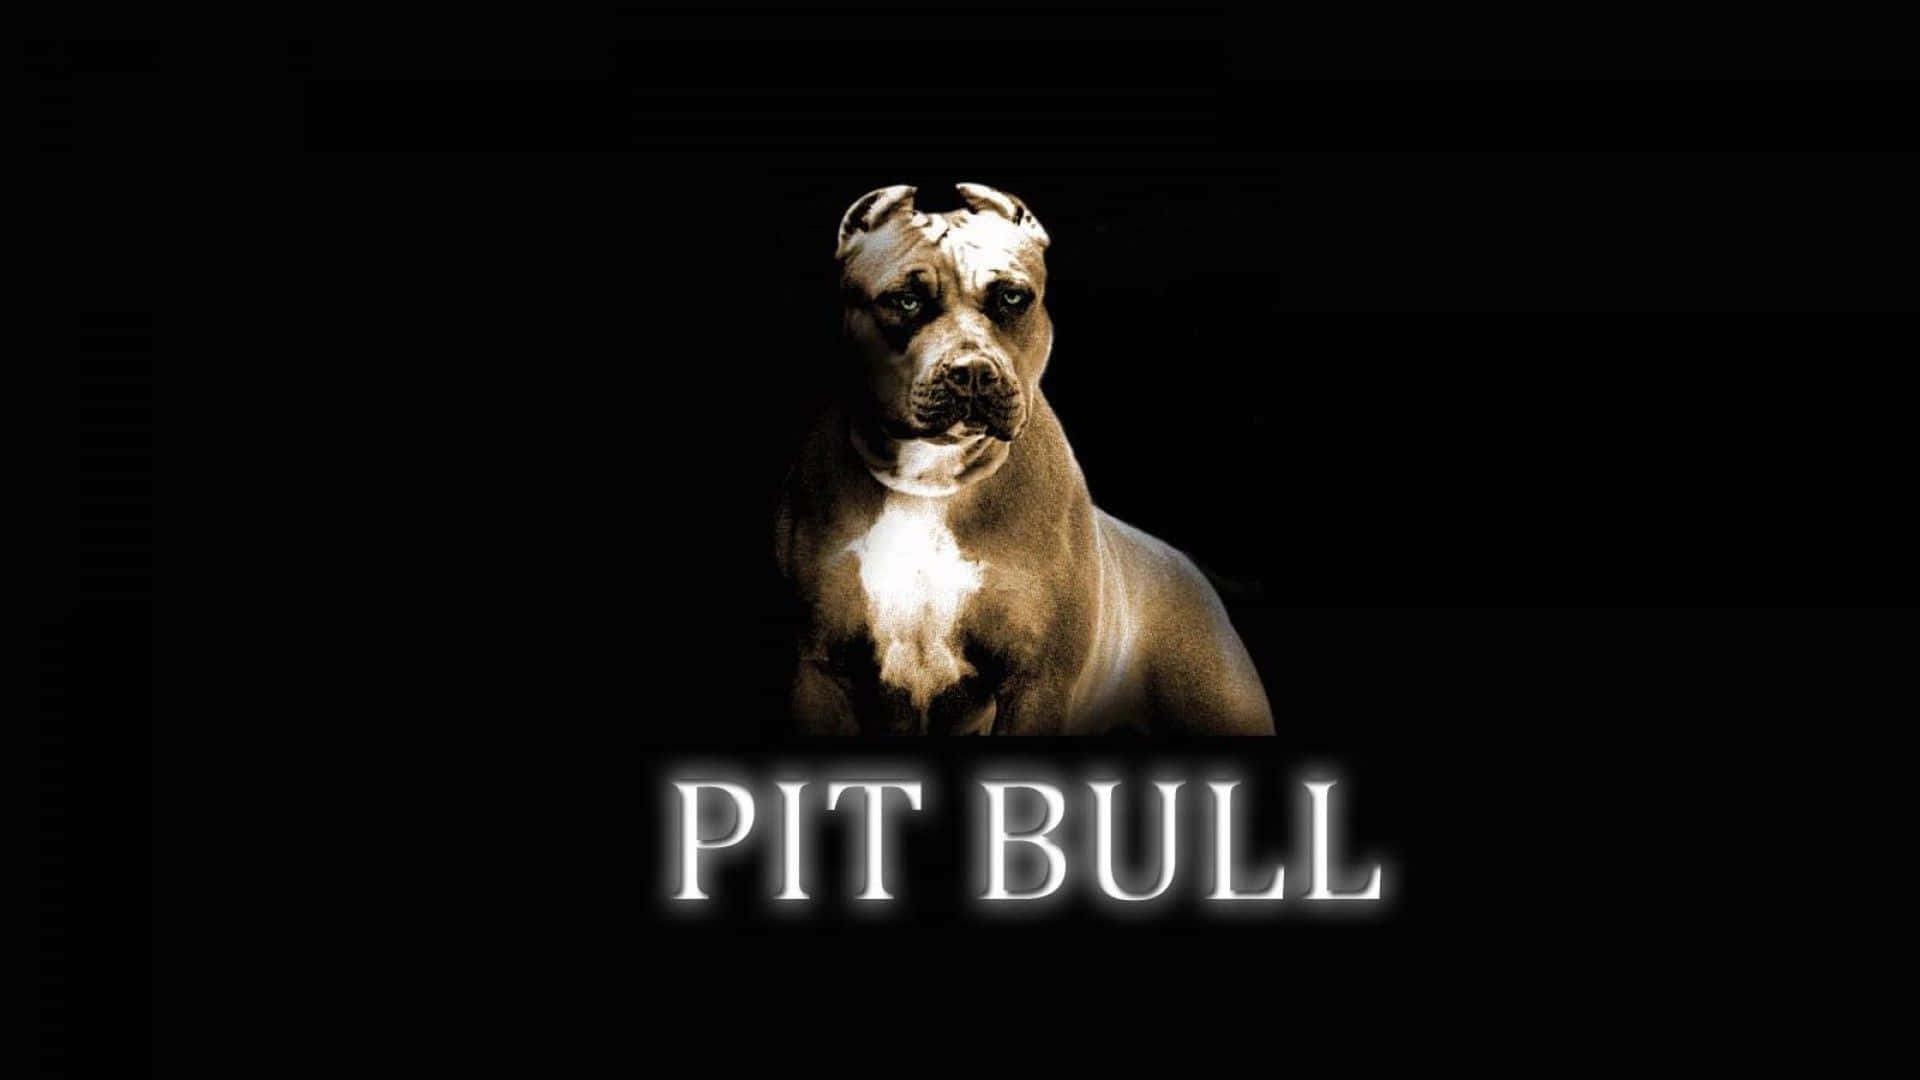 Pit Bull Logo On A Black Background Background